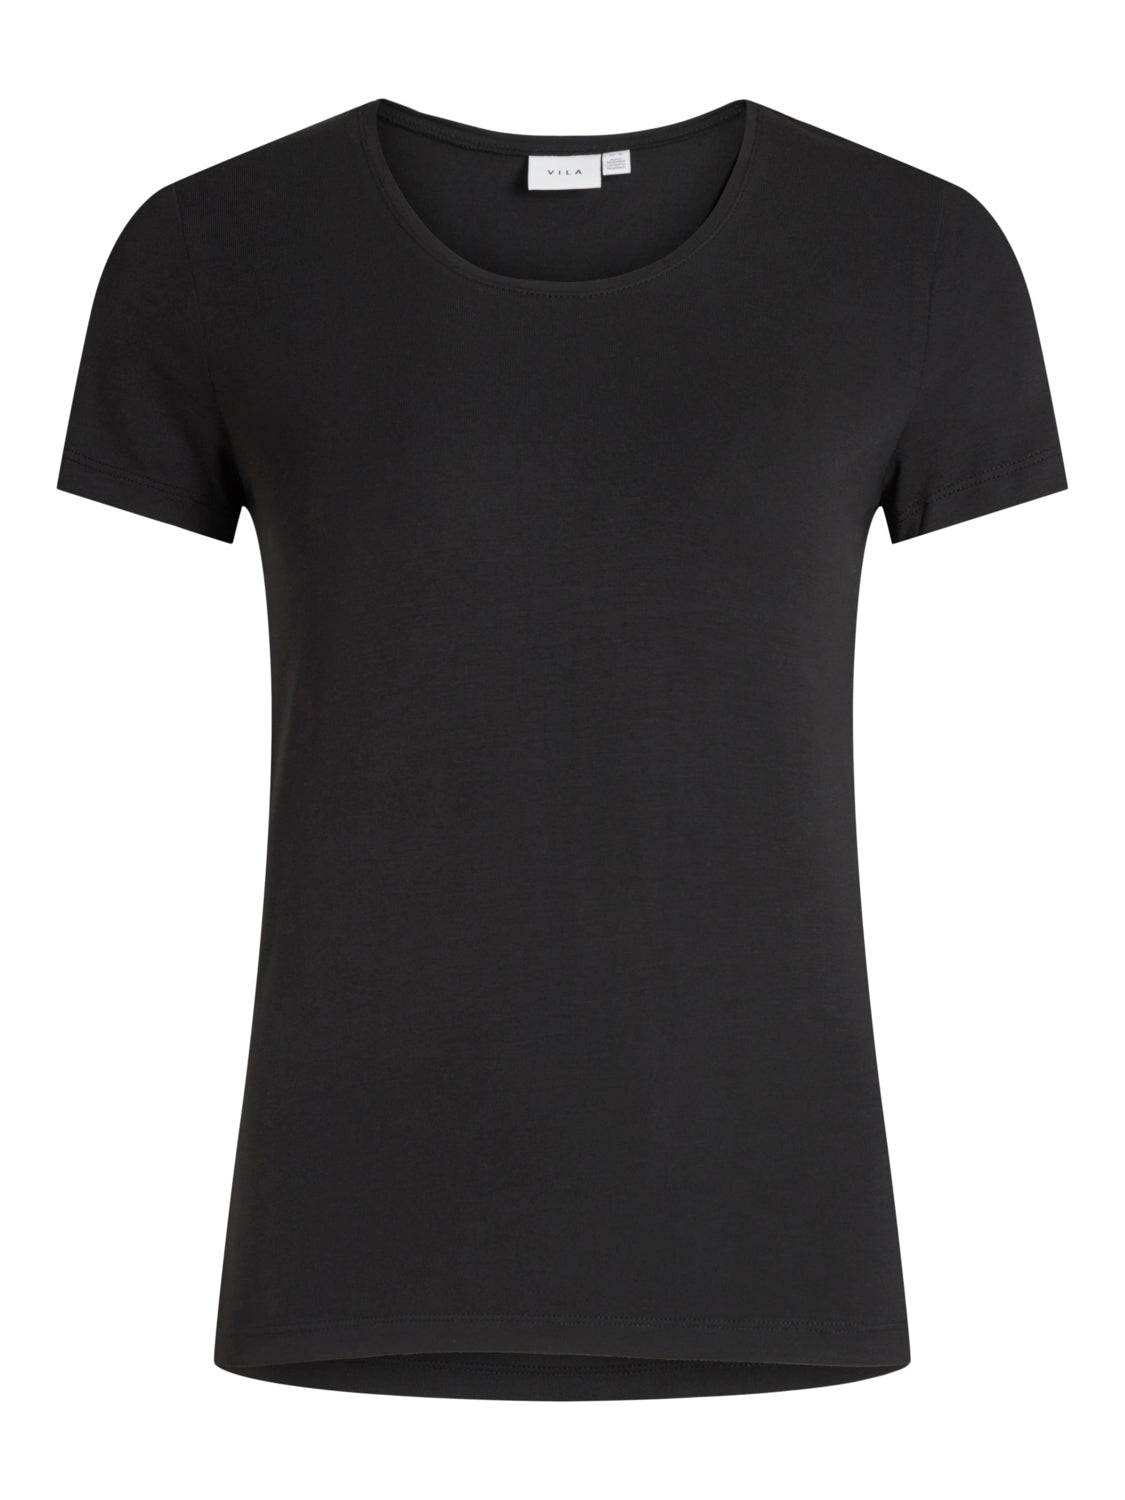 VIDAISY T-Shirt - Black